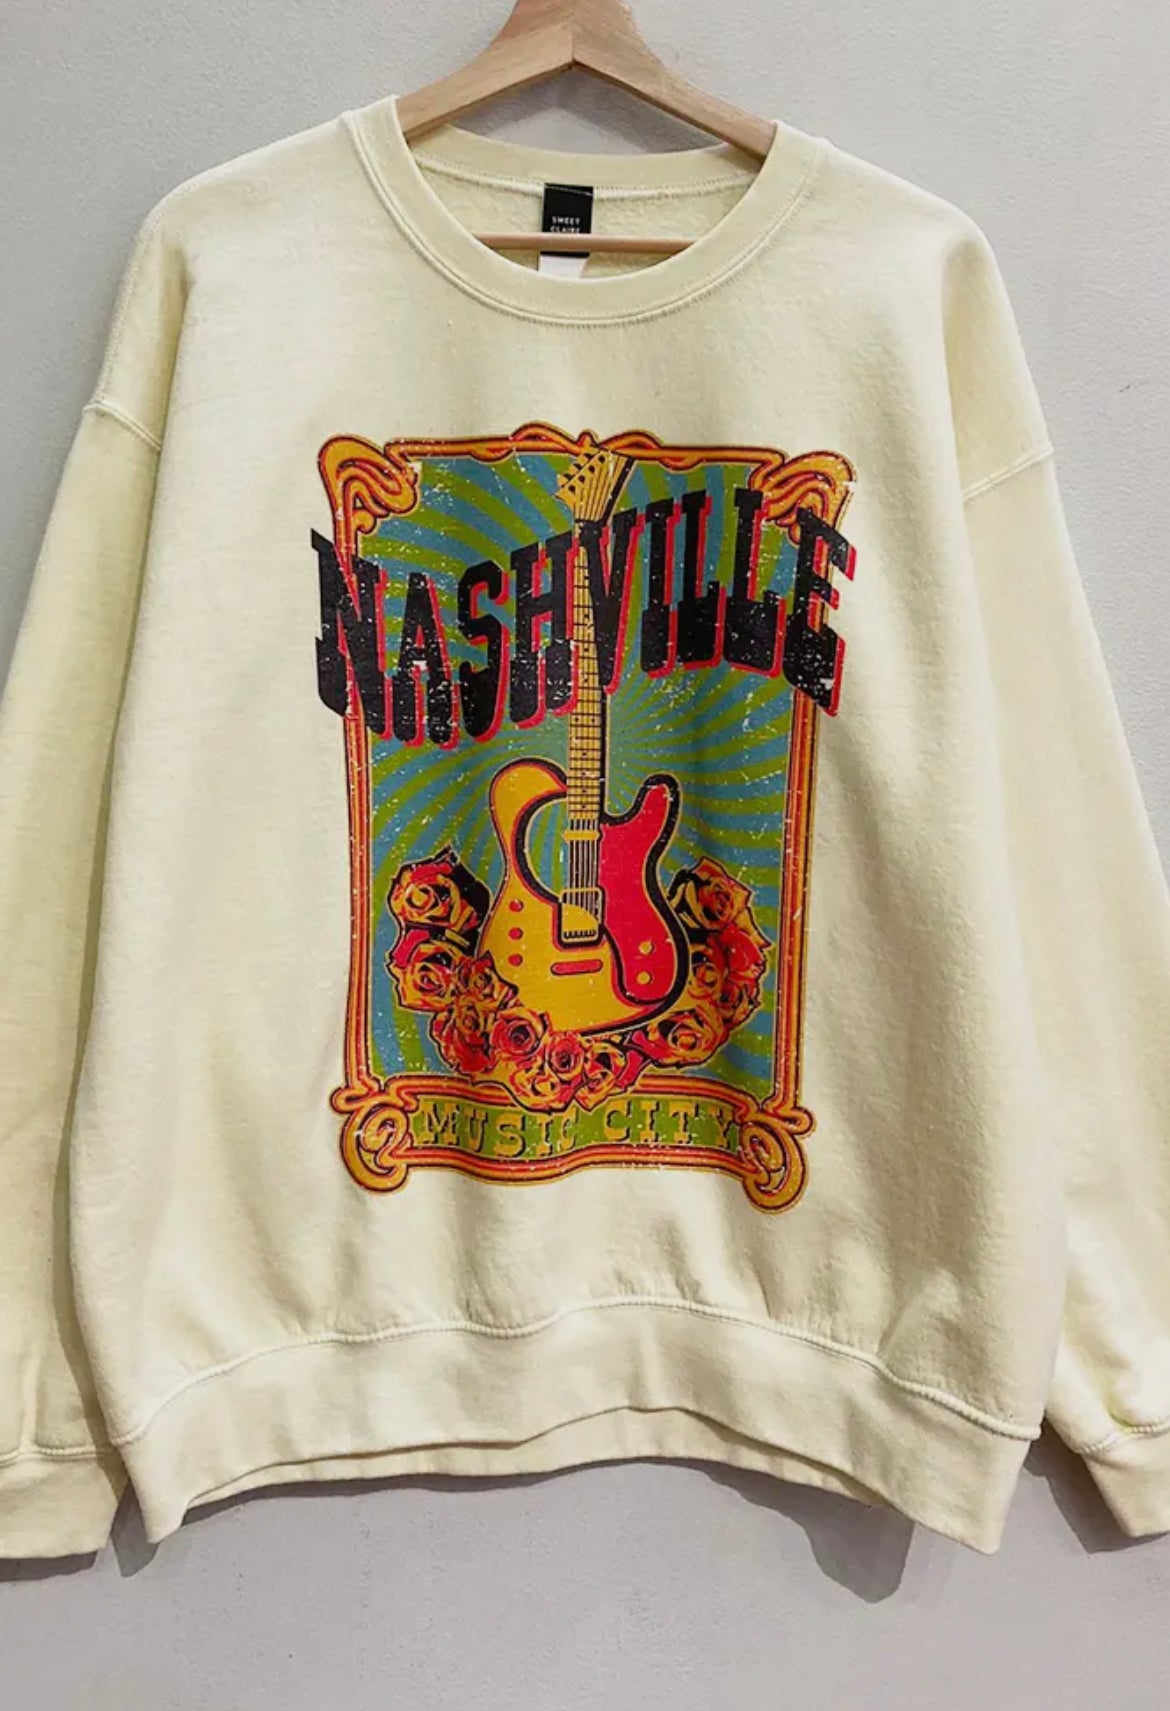 Nashville Graphic Crewneck Sweatshirt